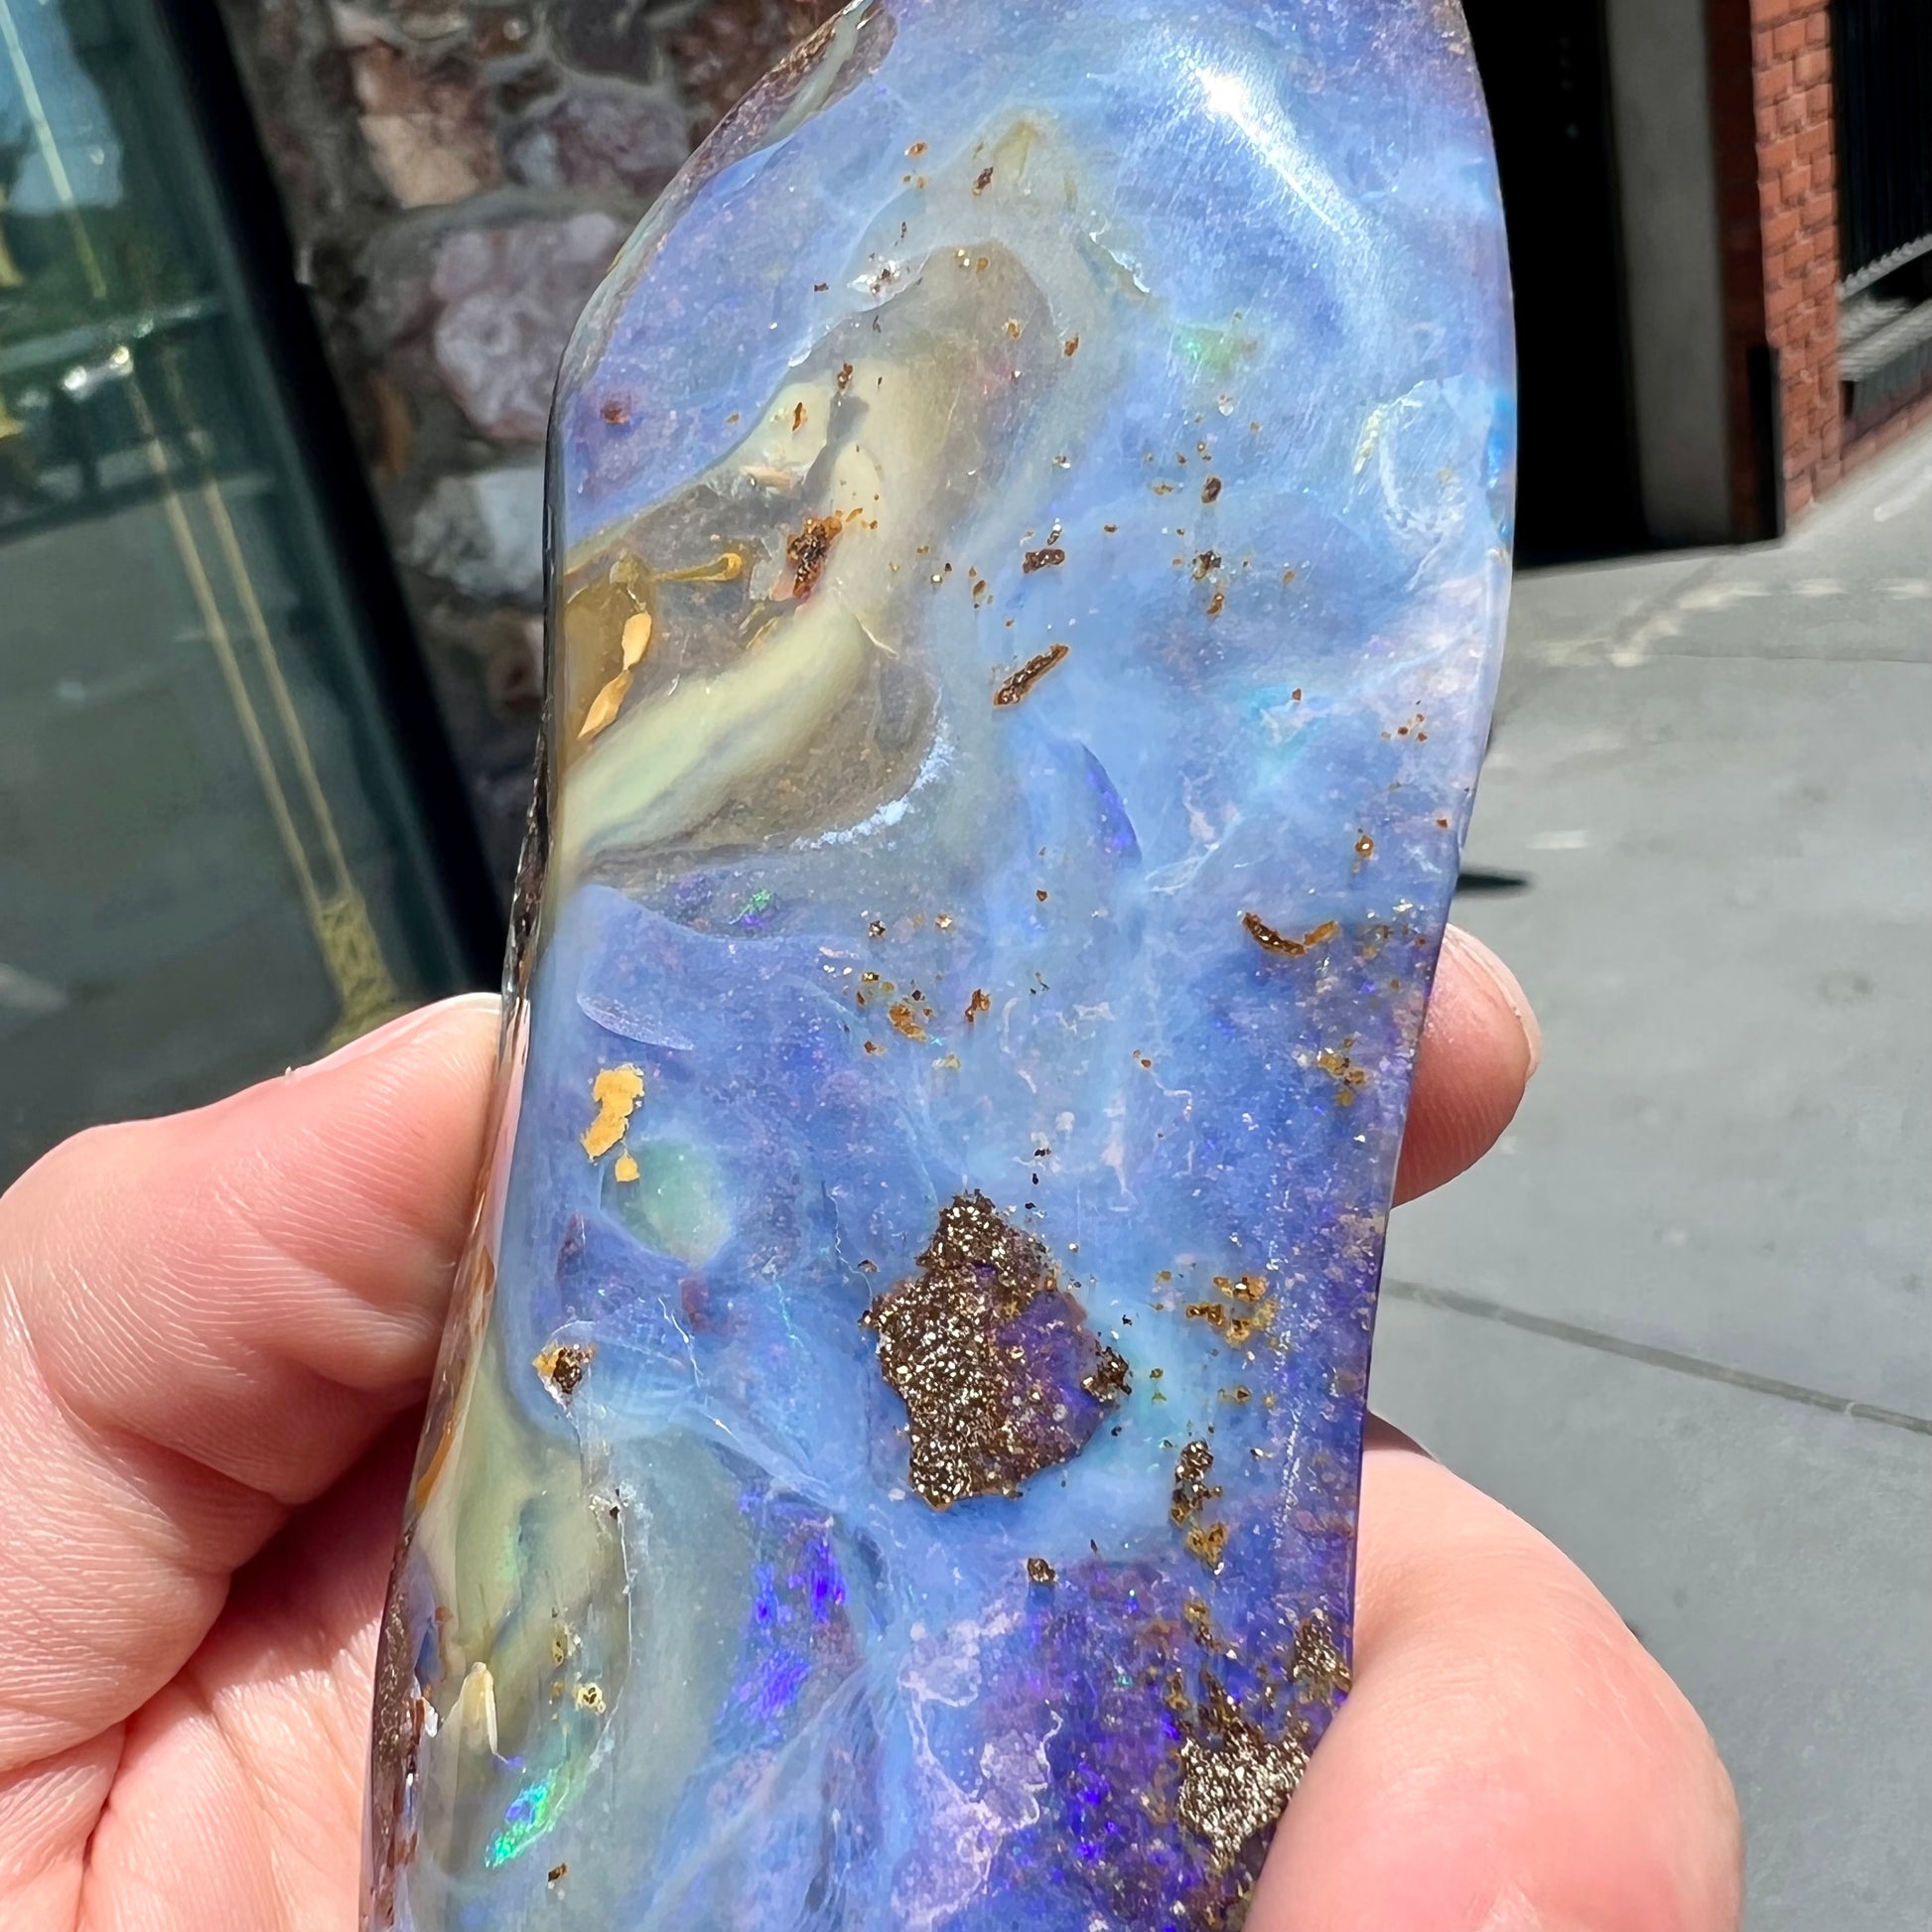 A 7 inch long polished blue Quilpie boulder opal specimen from Queensland, Australia.